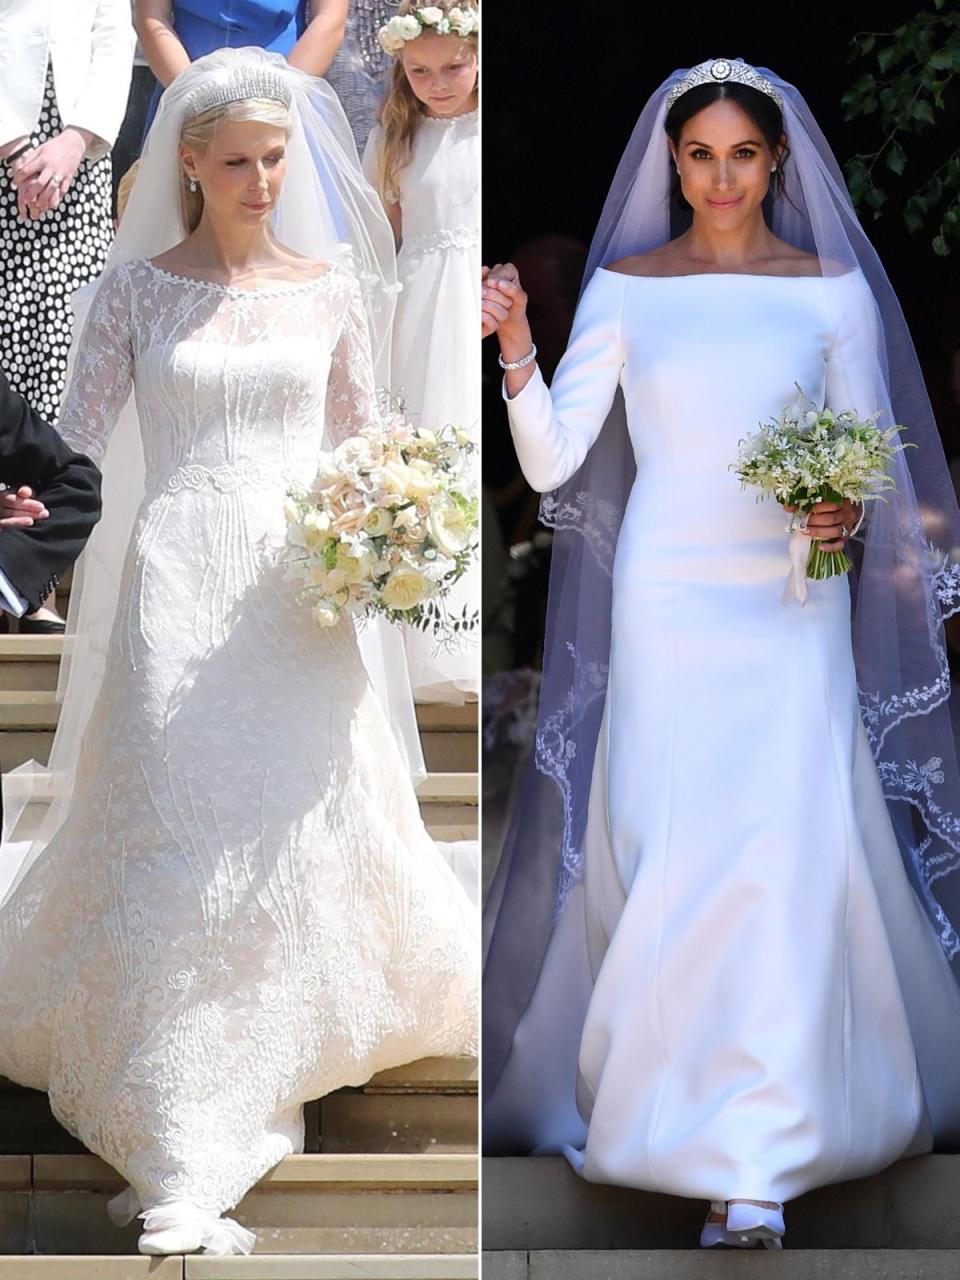 Lady Gabriella's Wedding Dress Side-by-Side with Meghan Markle